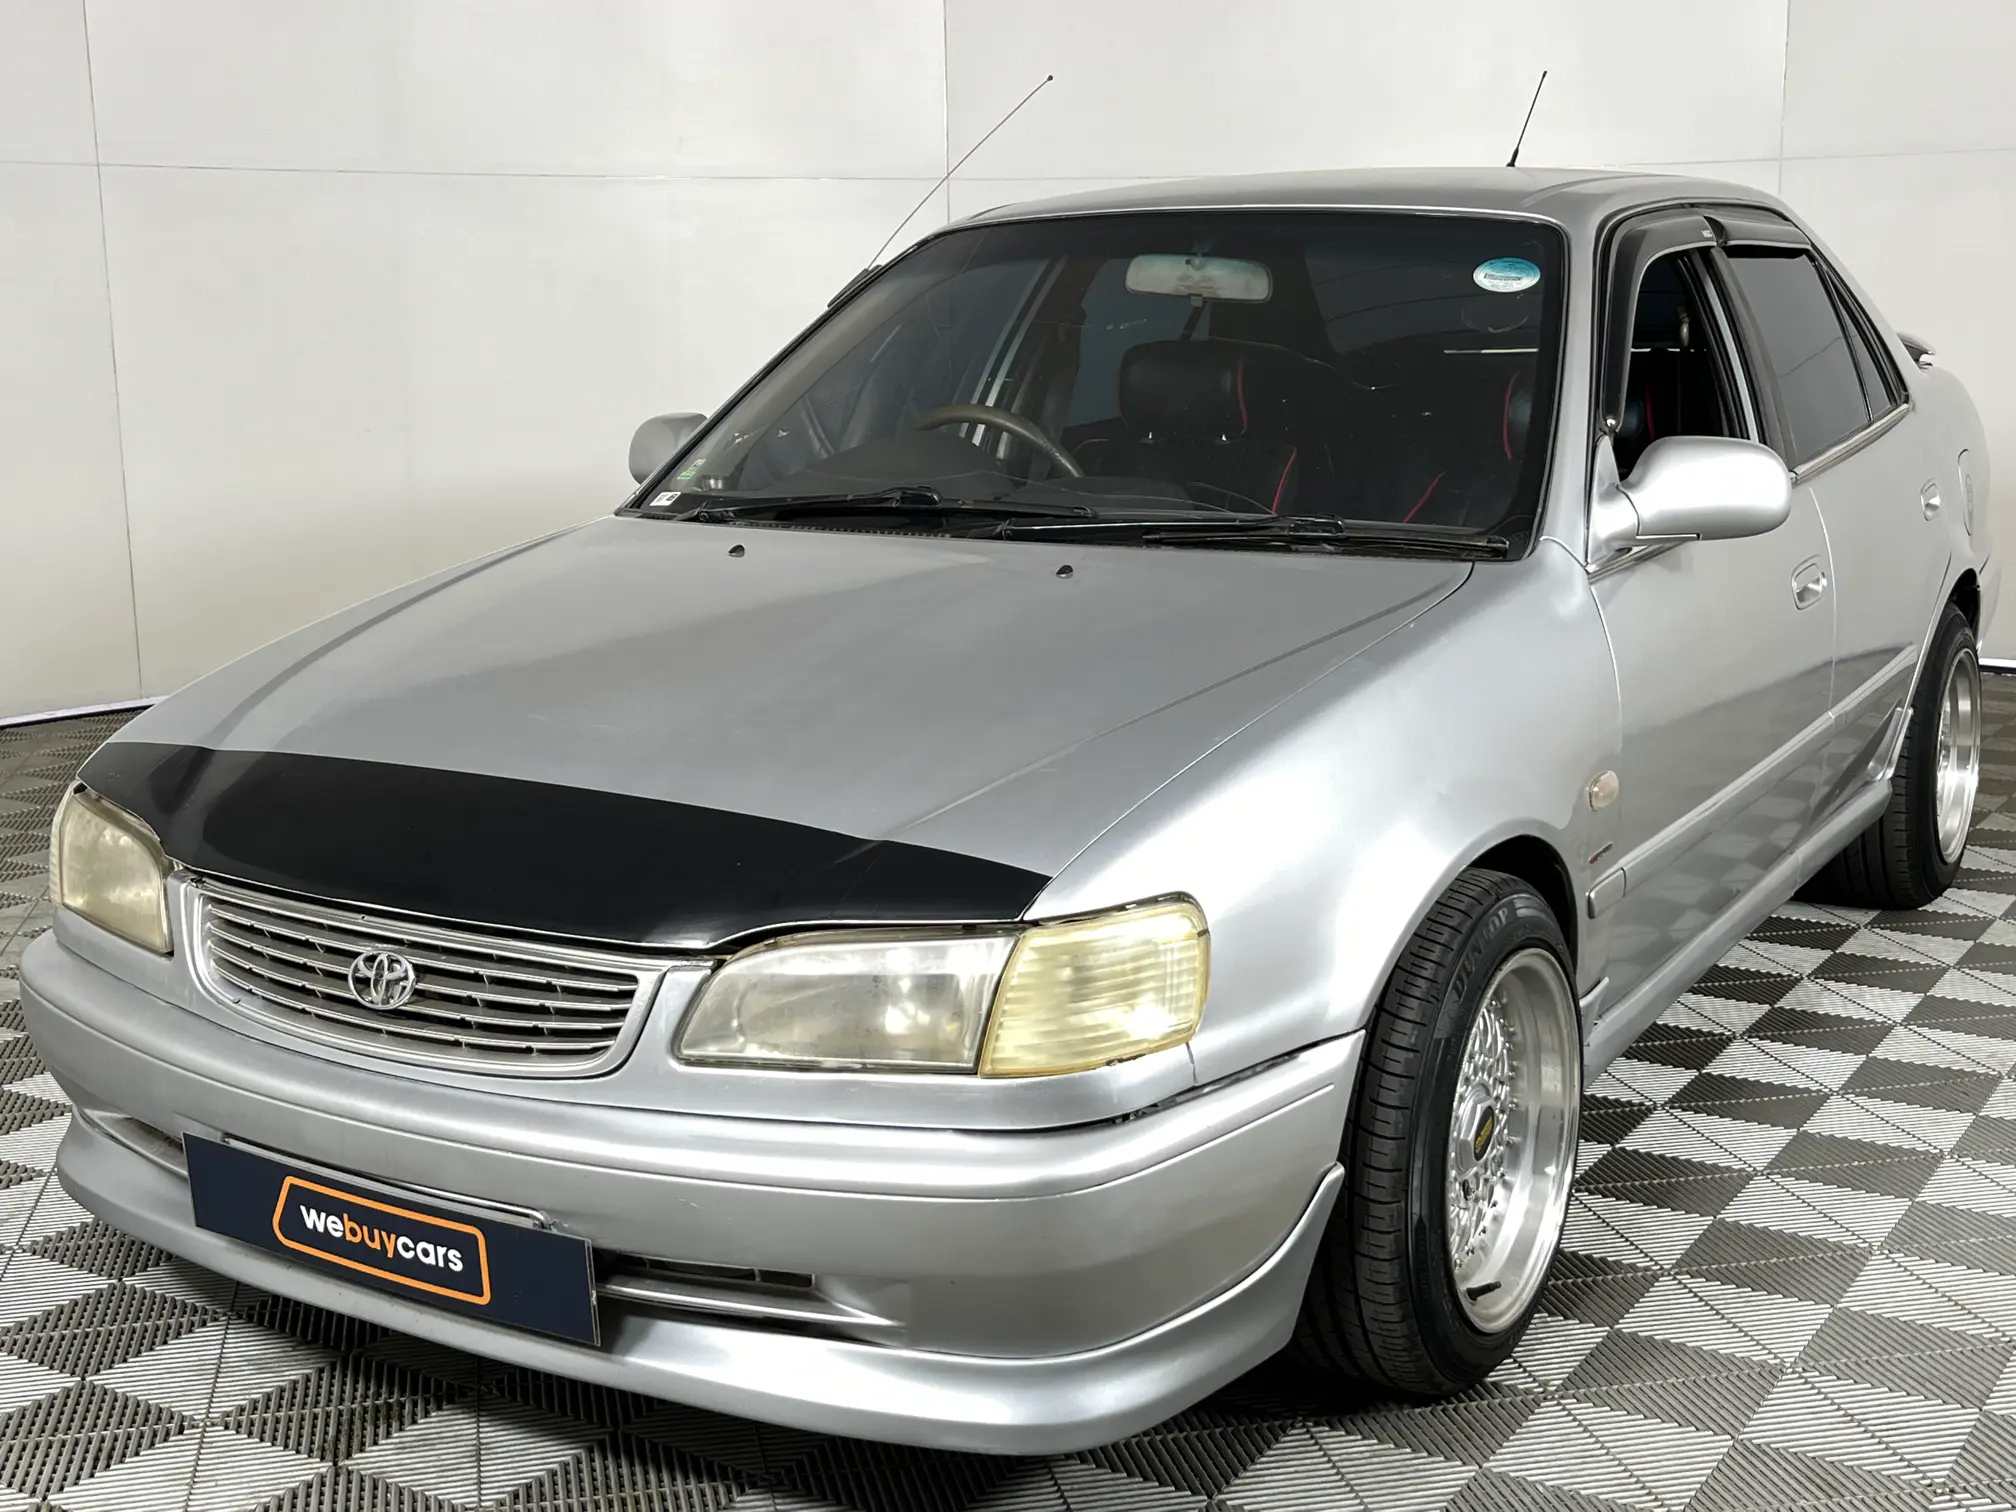 2000 Toyota Corolla RXI